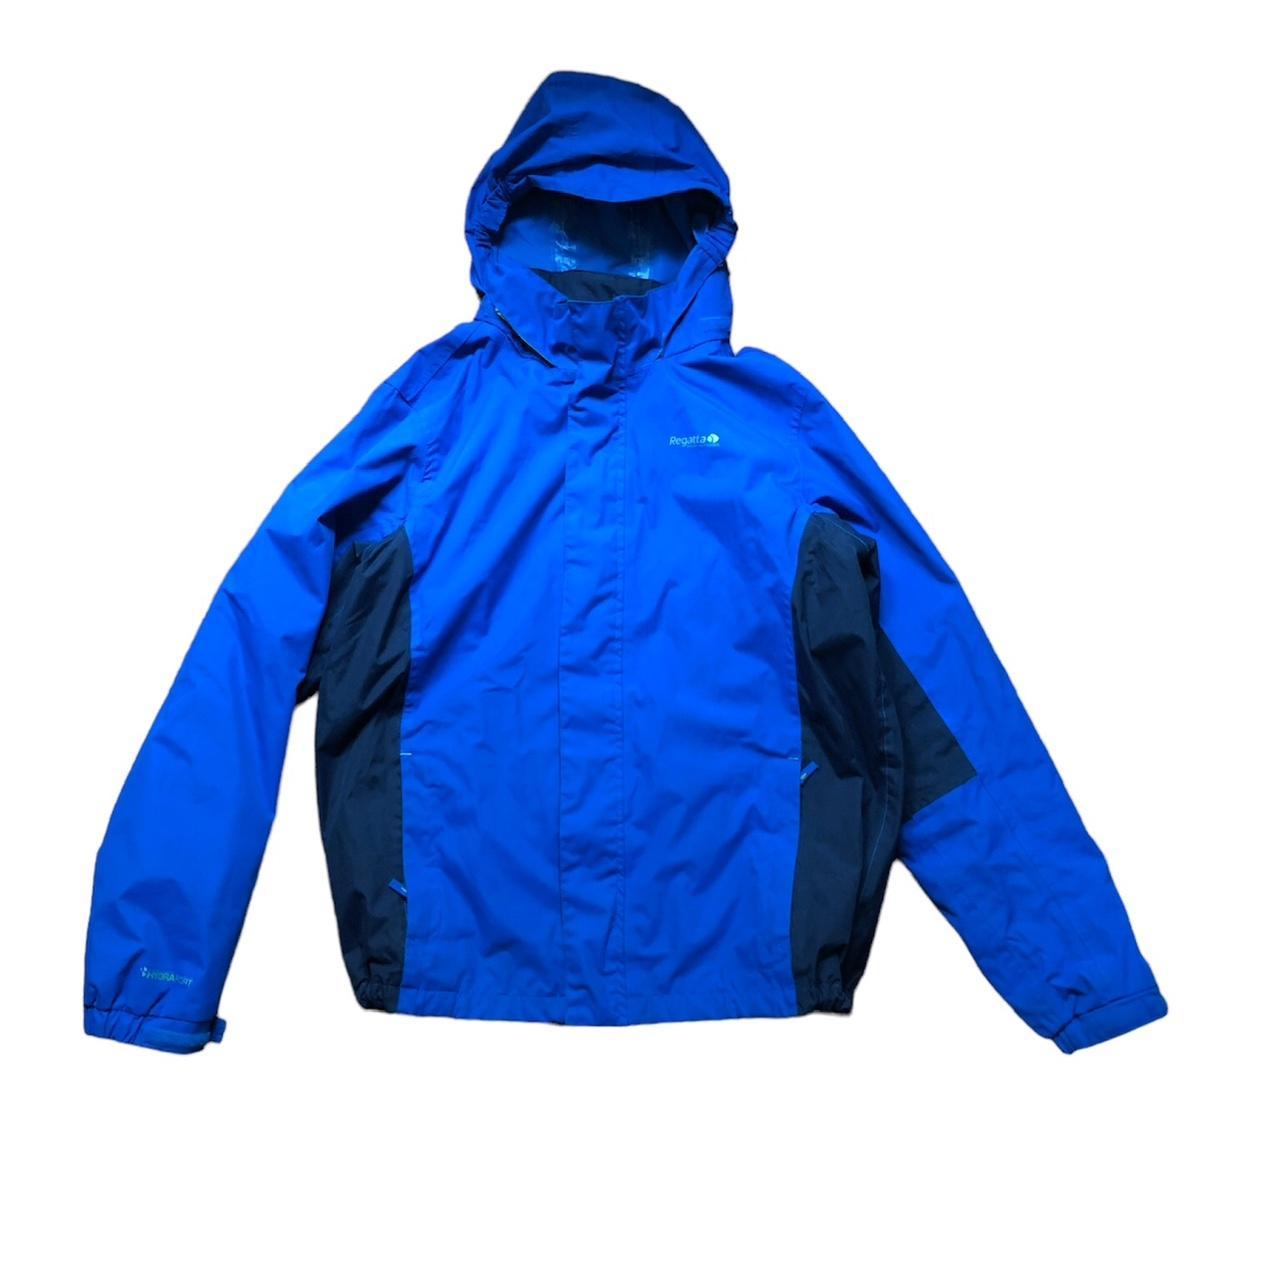 Regatta Blue and Neon windbreaker jacket Another... - Depop